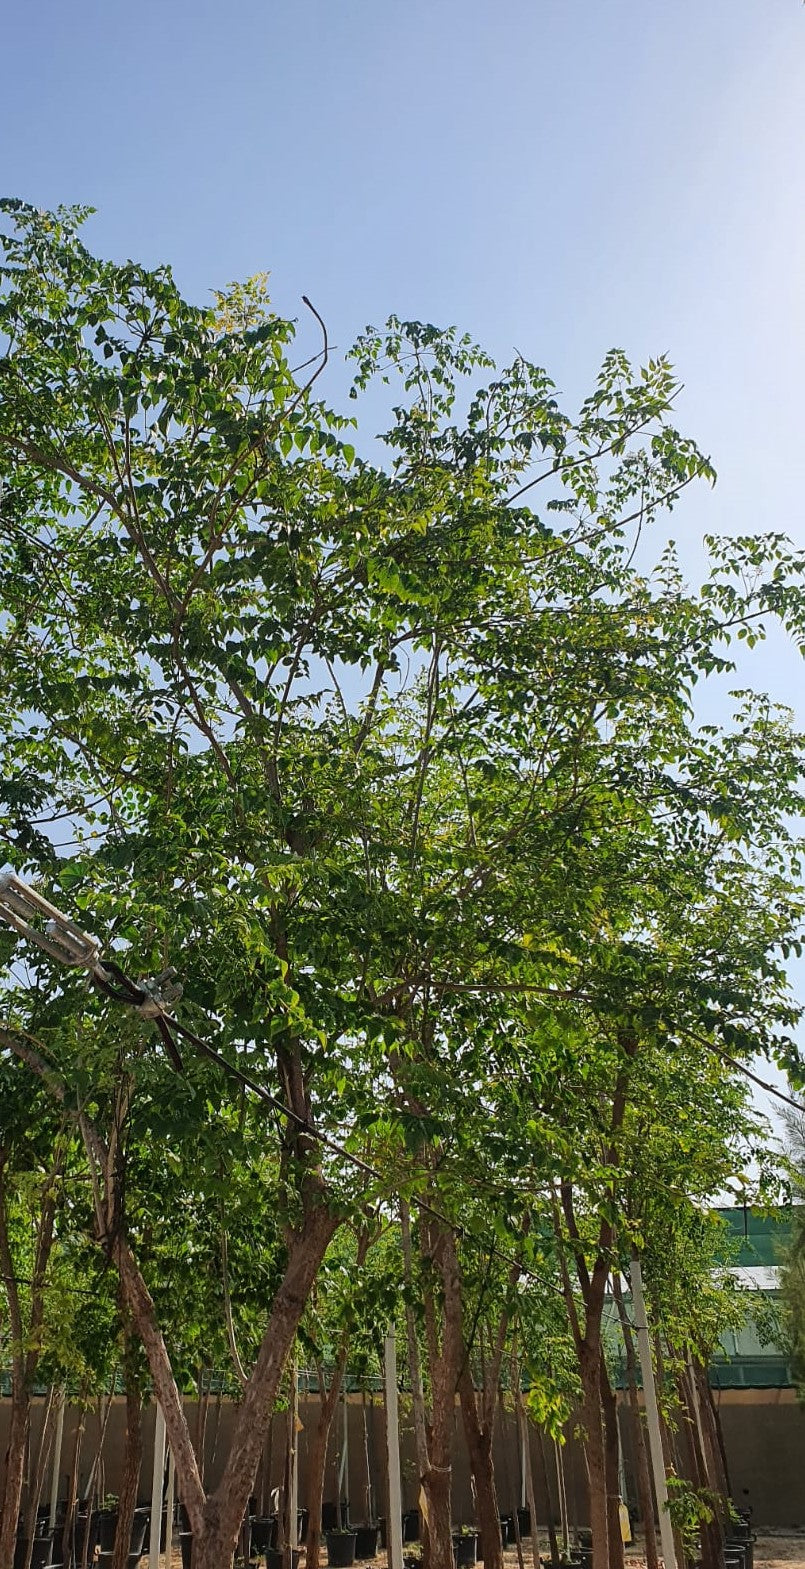 Millingtonia Hortensis 'Indian Cork Tree'